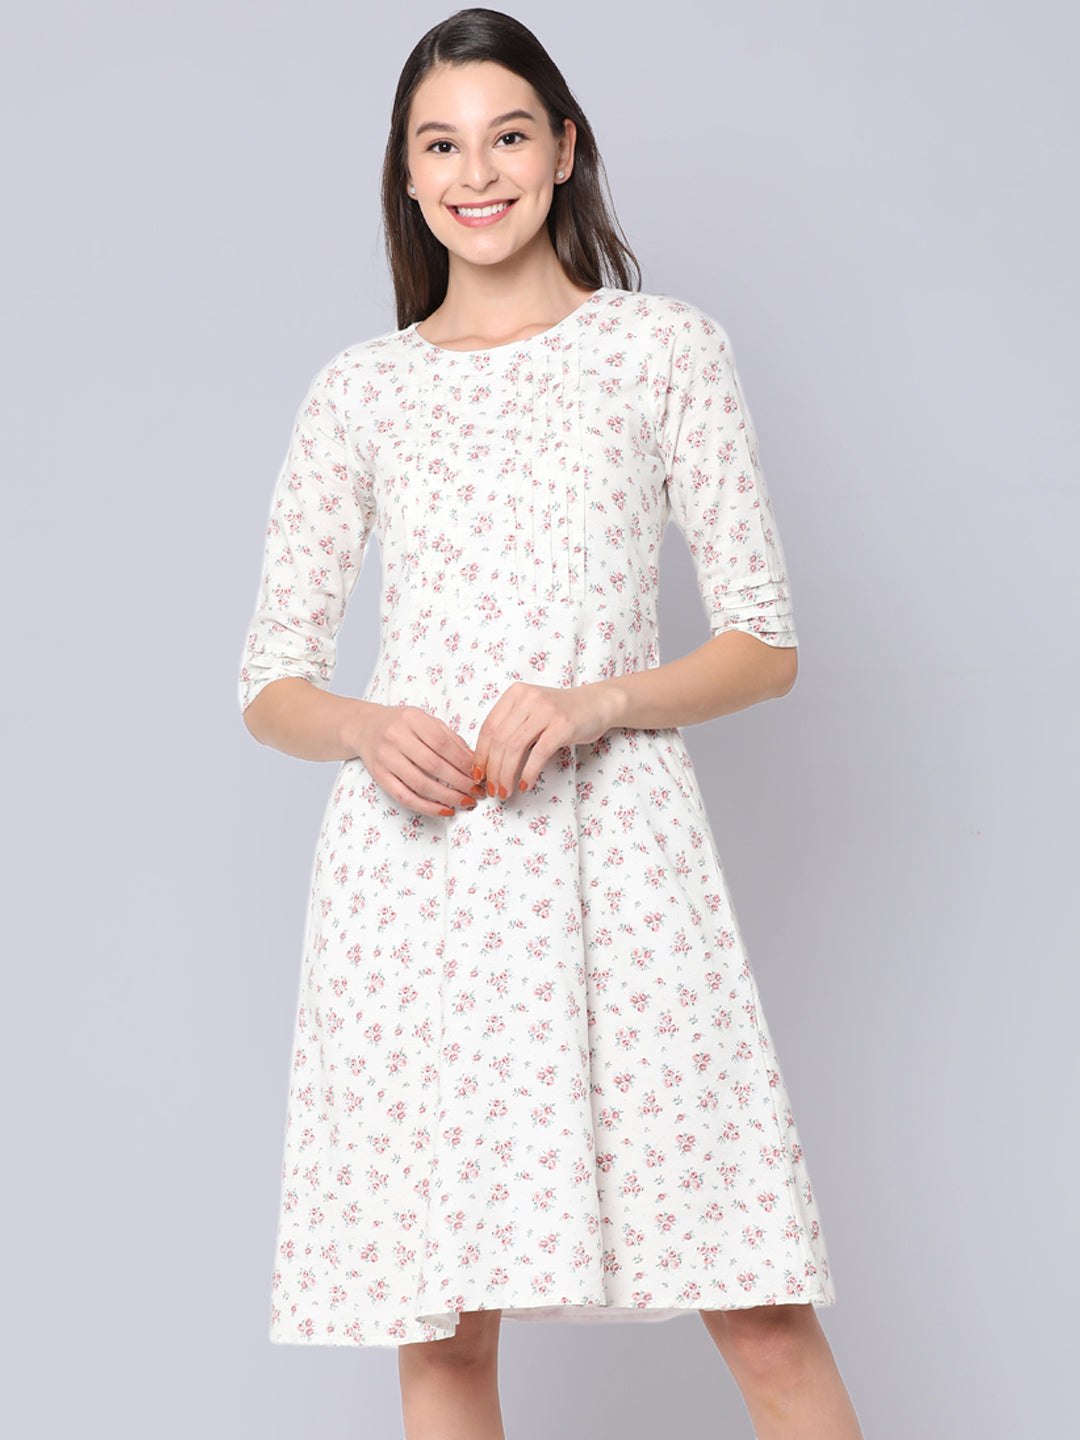 Cinnamon Closet Off-White Printed Cotton Floral Dress